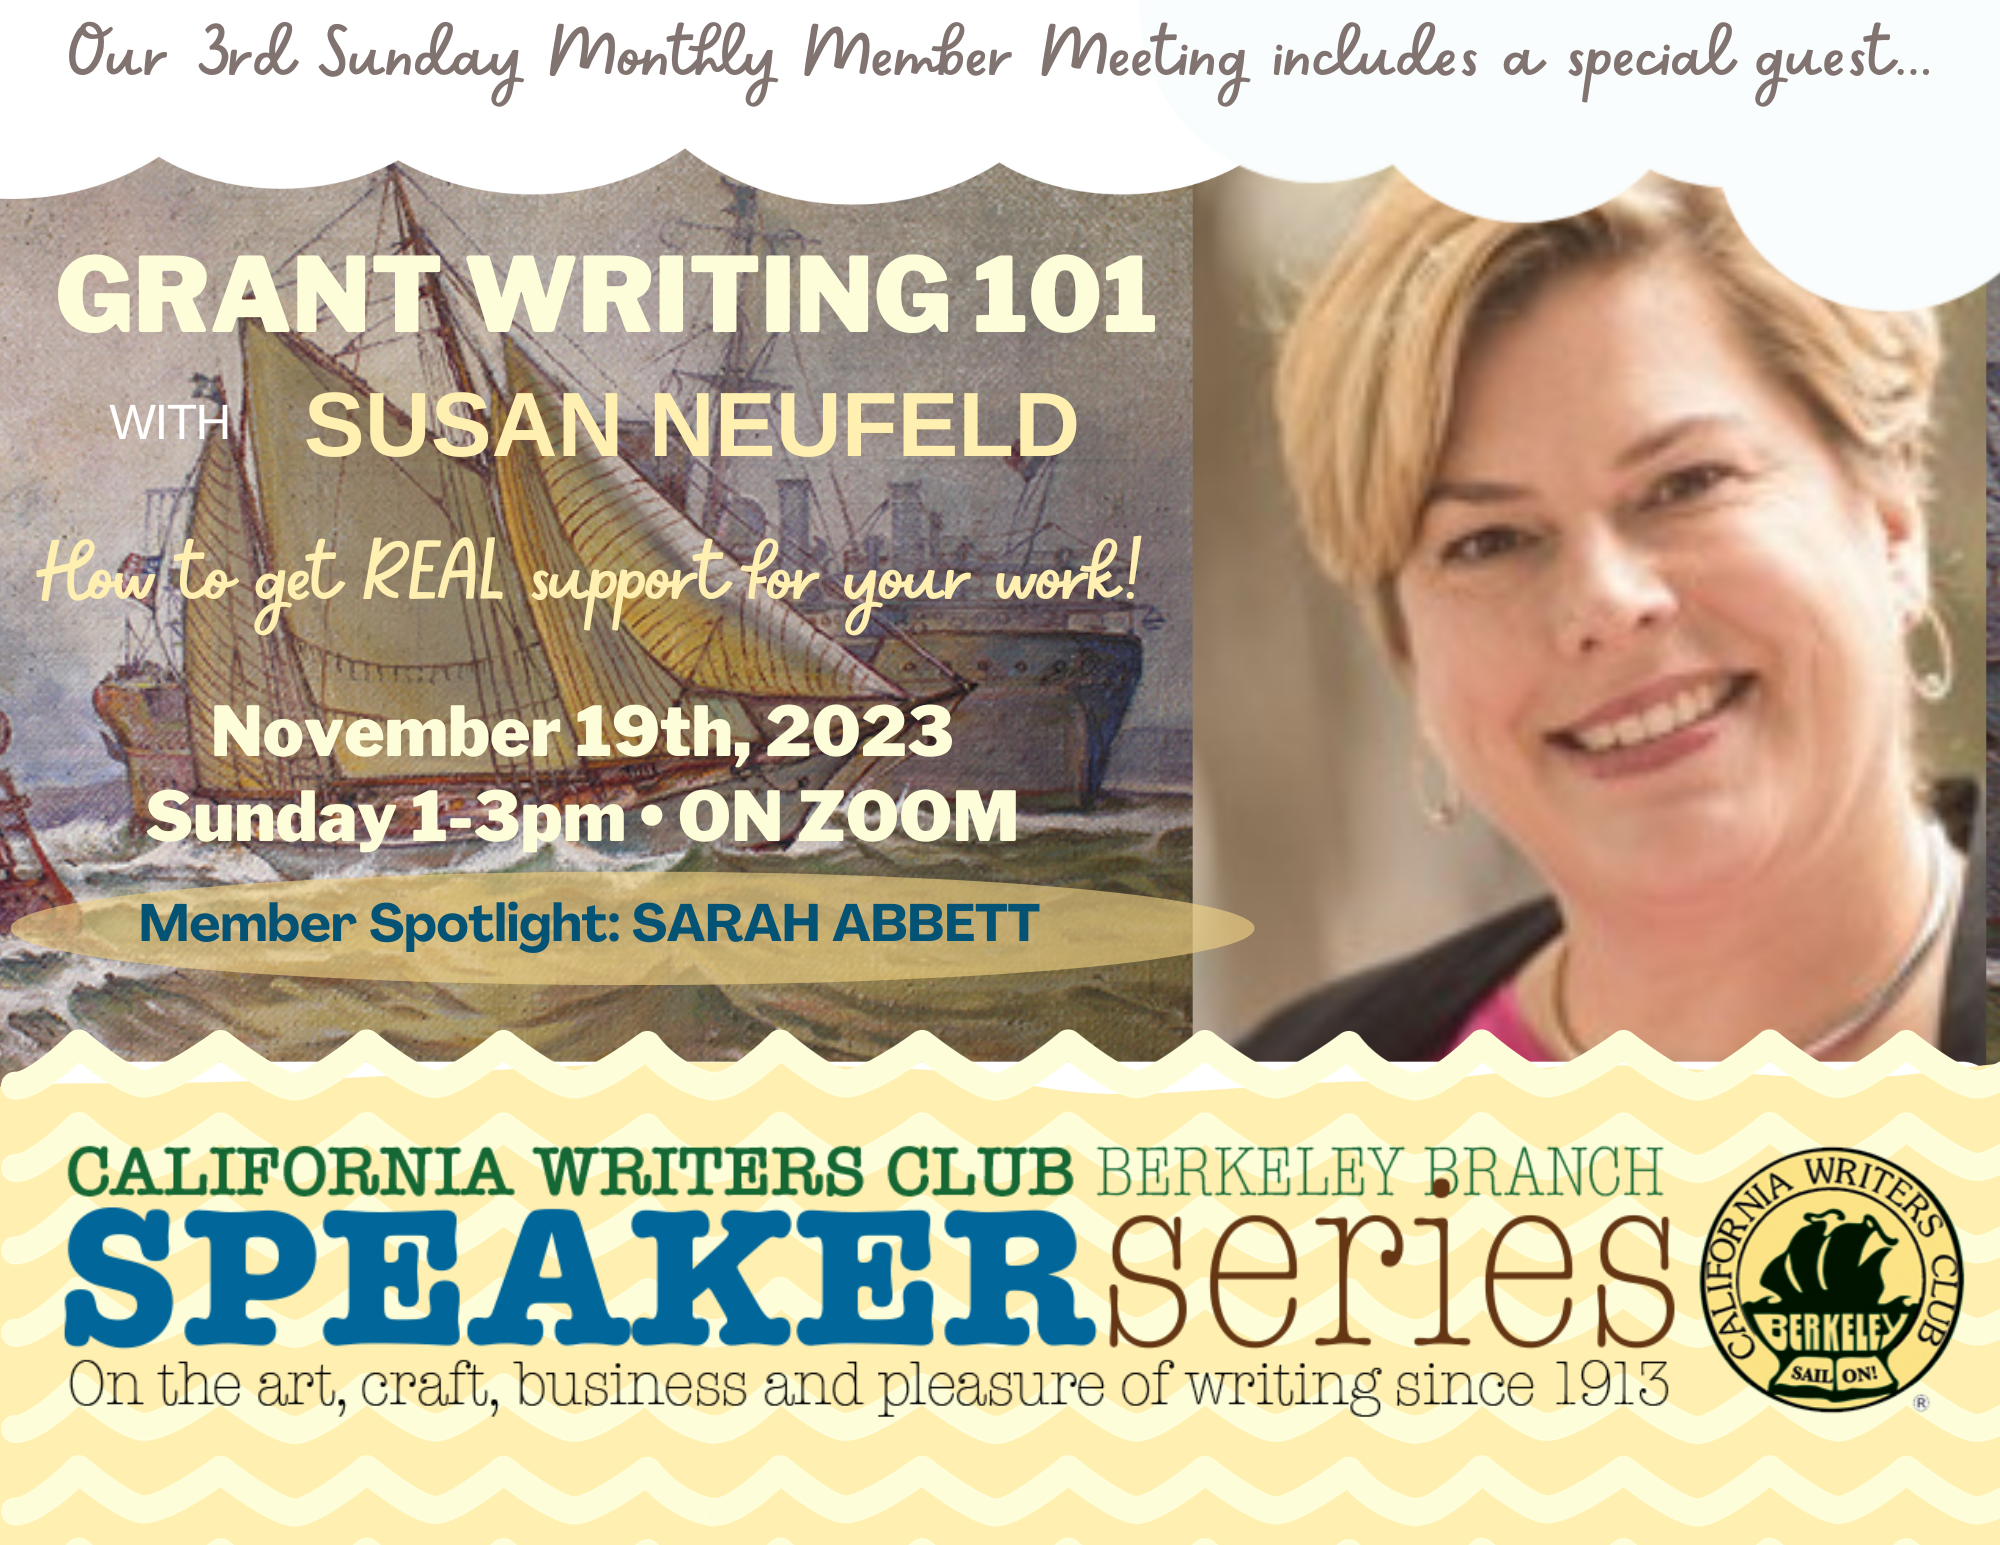 “Grant Writing 101” with Susan Neufeld Paul on November 19th, 2023